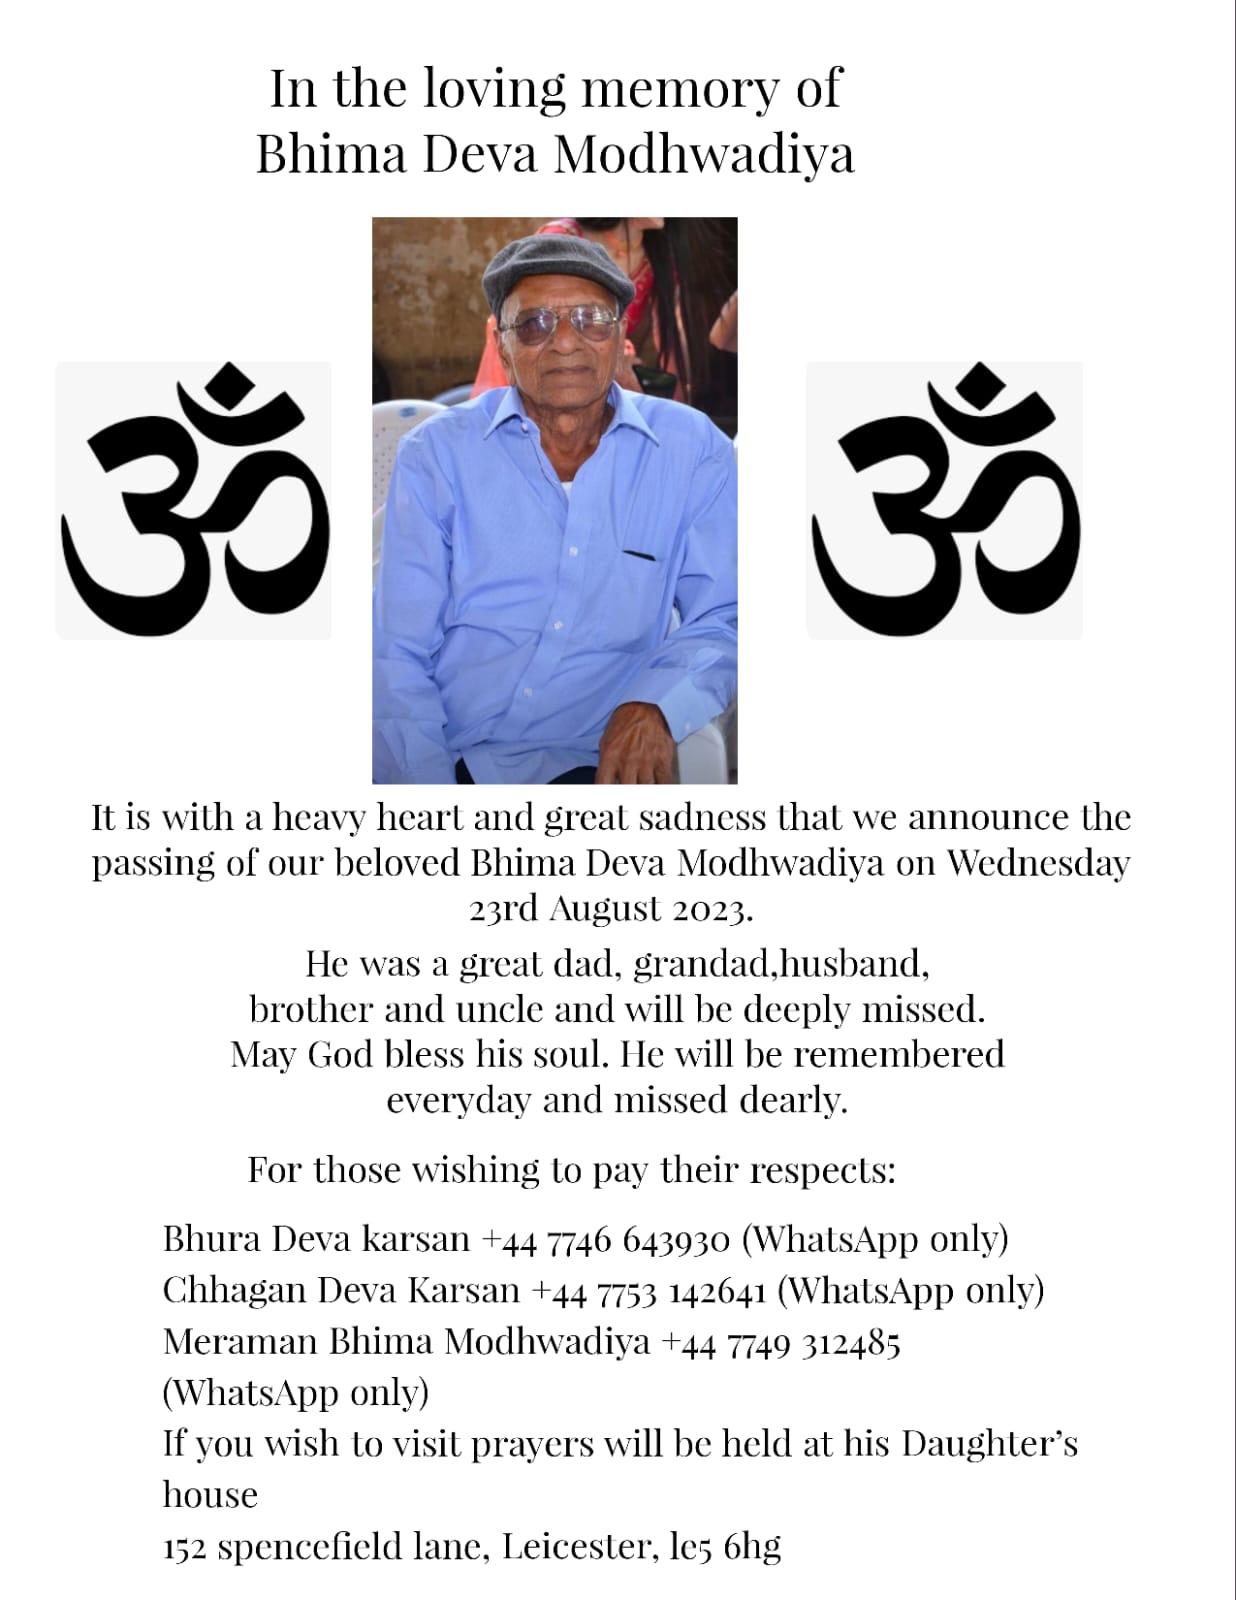 Deva Bhima Modhvadiya passed away